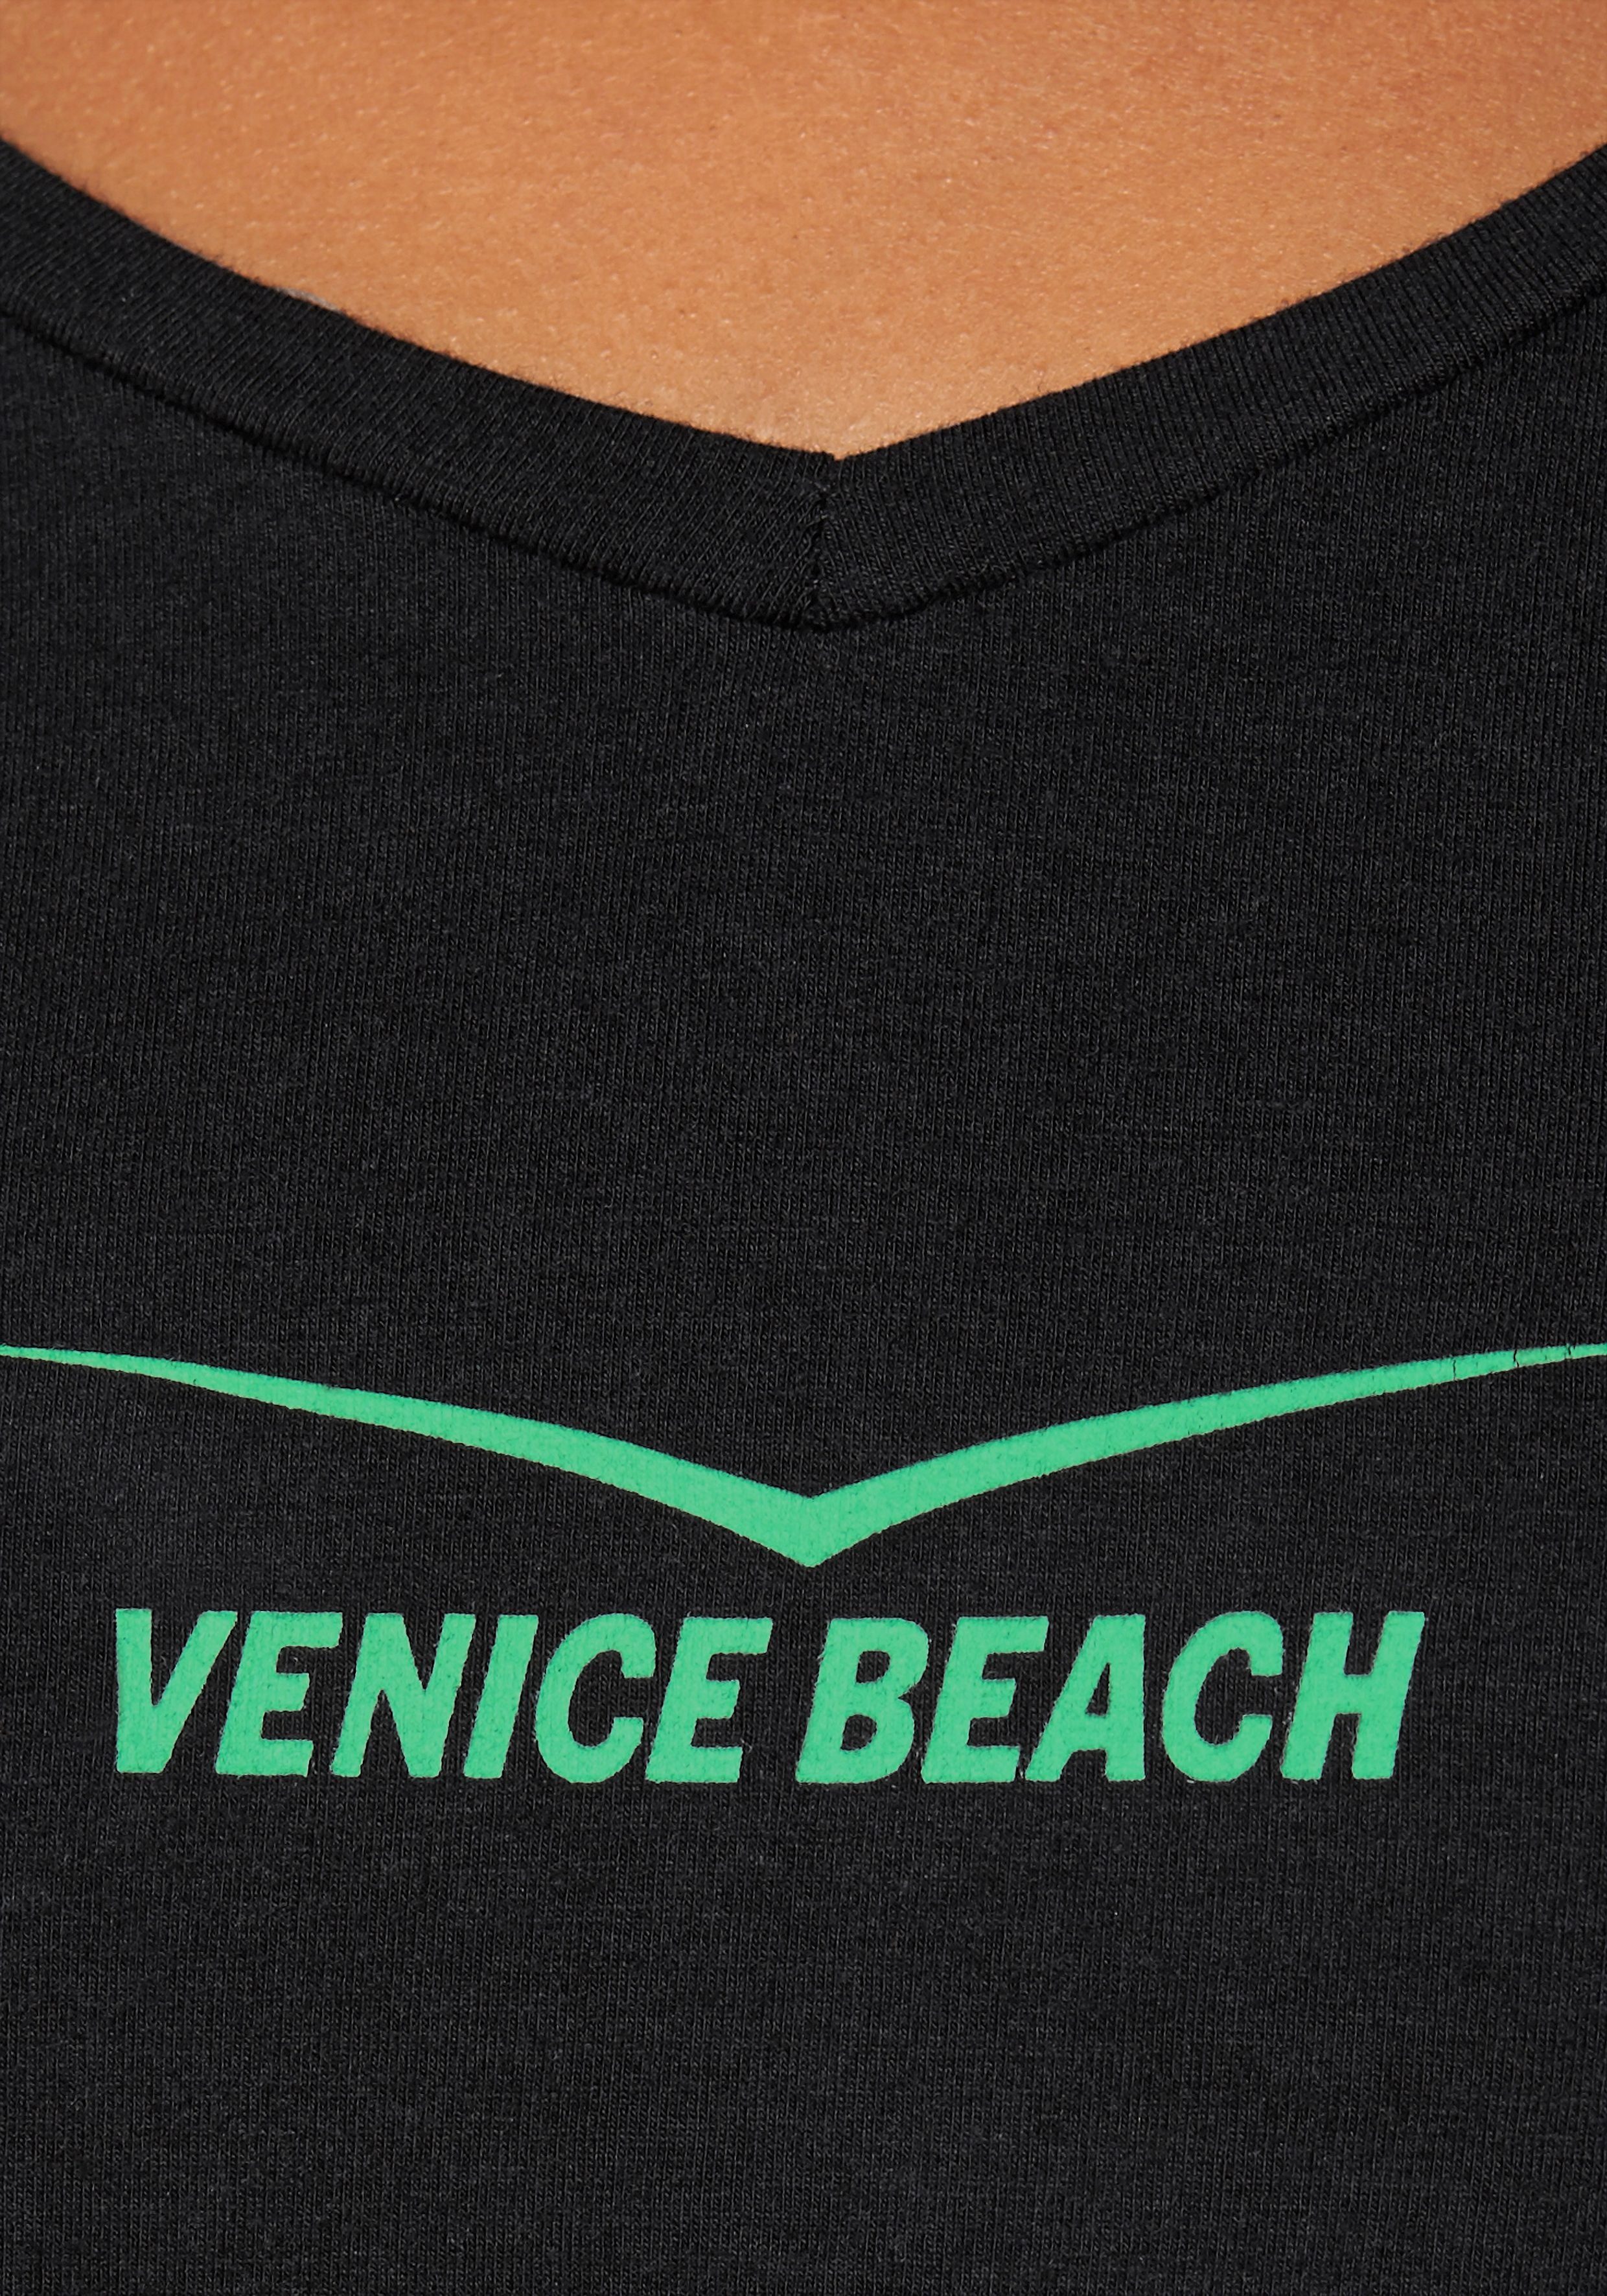 Venice Beach T-Shirt Größen Große schwarz